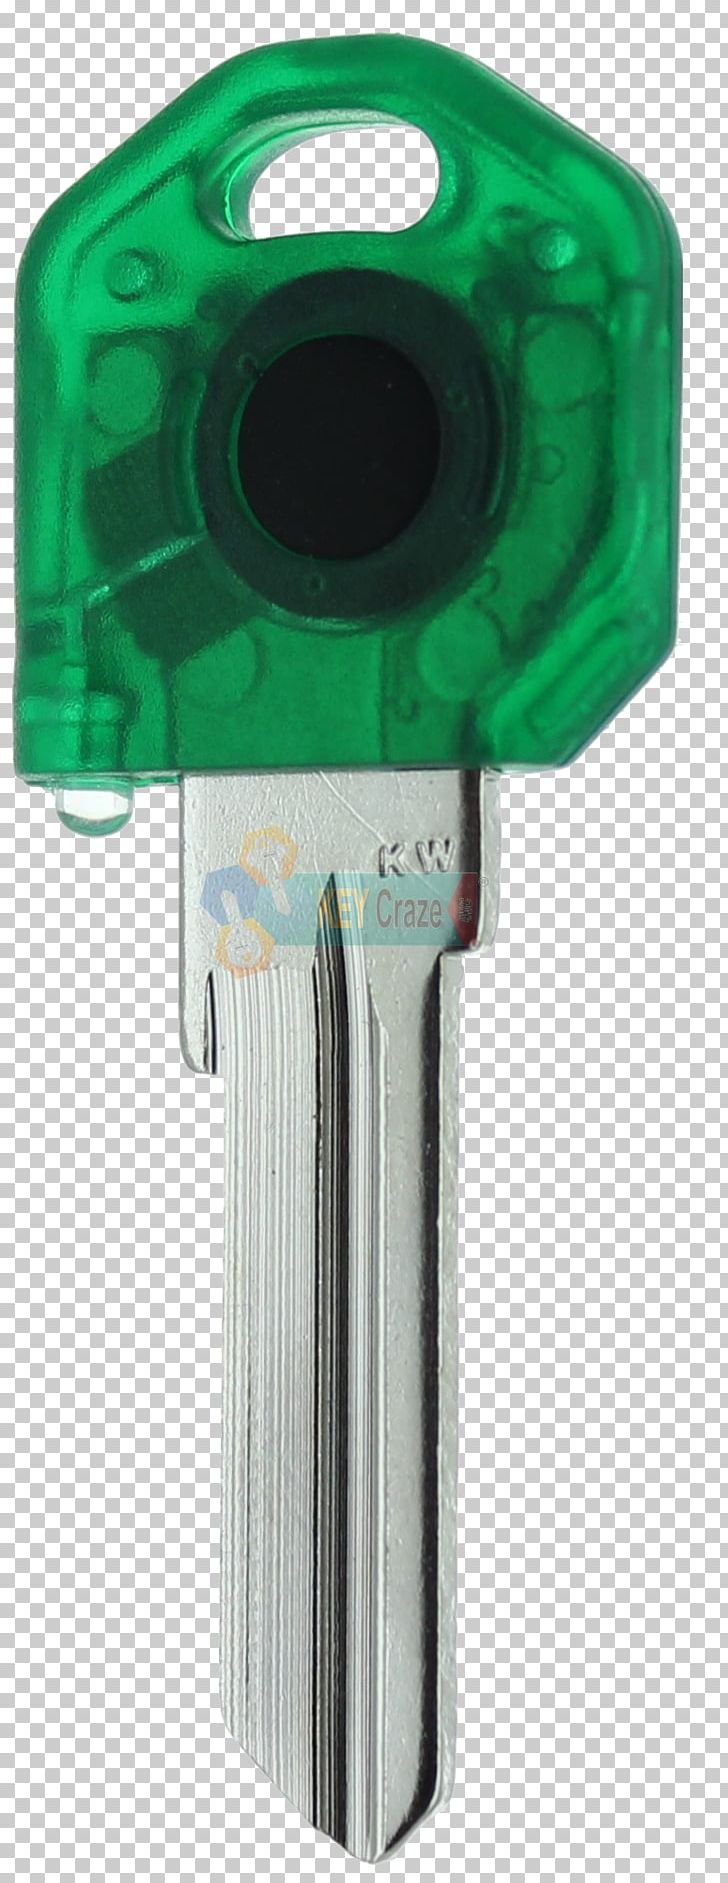 Light-emitting Diode Key Craze Inc Key Blank PNG, Clipart, Bulldog, Cylinder, Green, Hardware, Key Free PNG Download